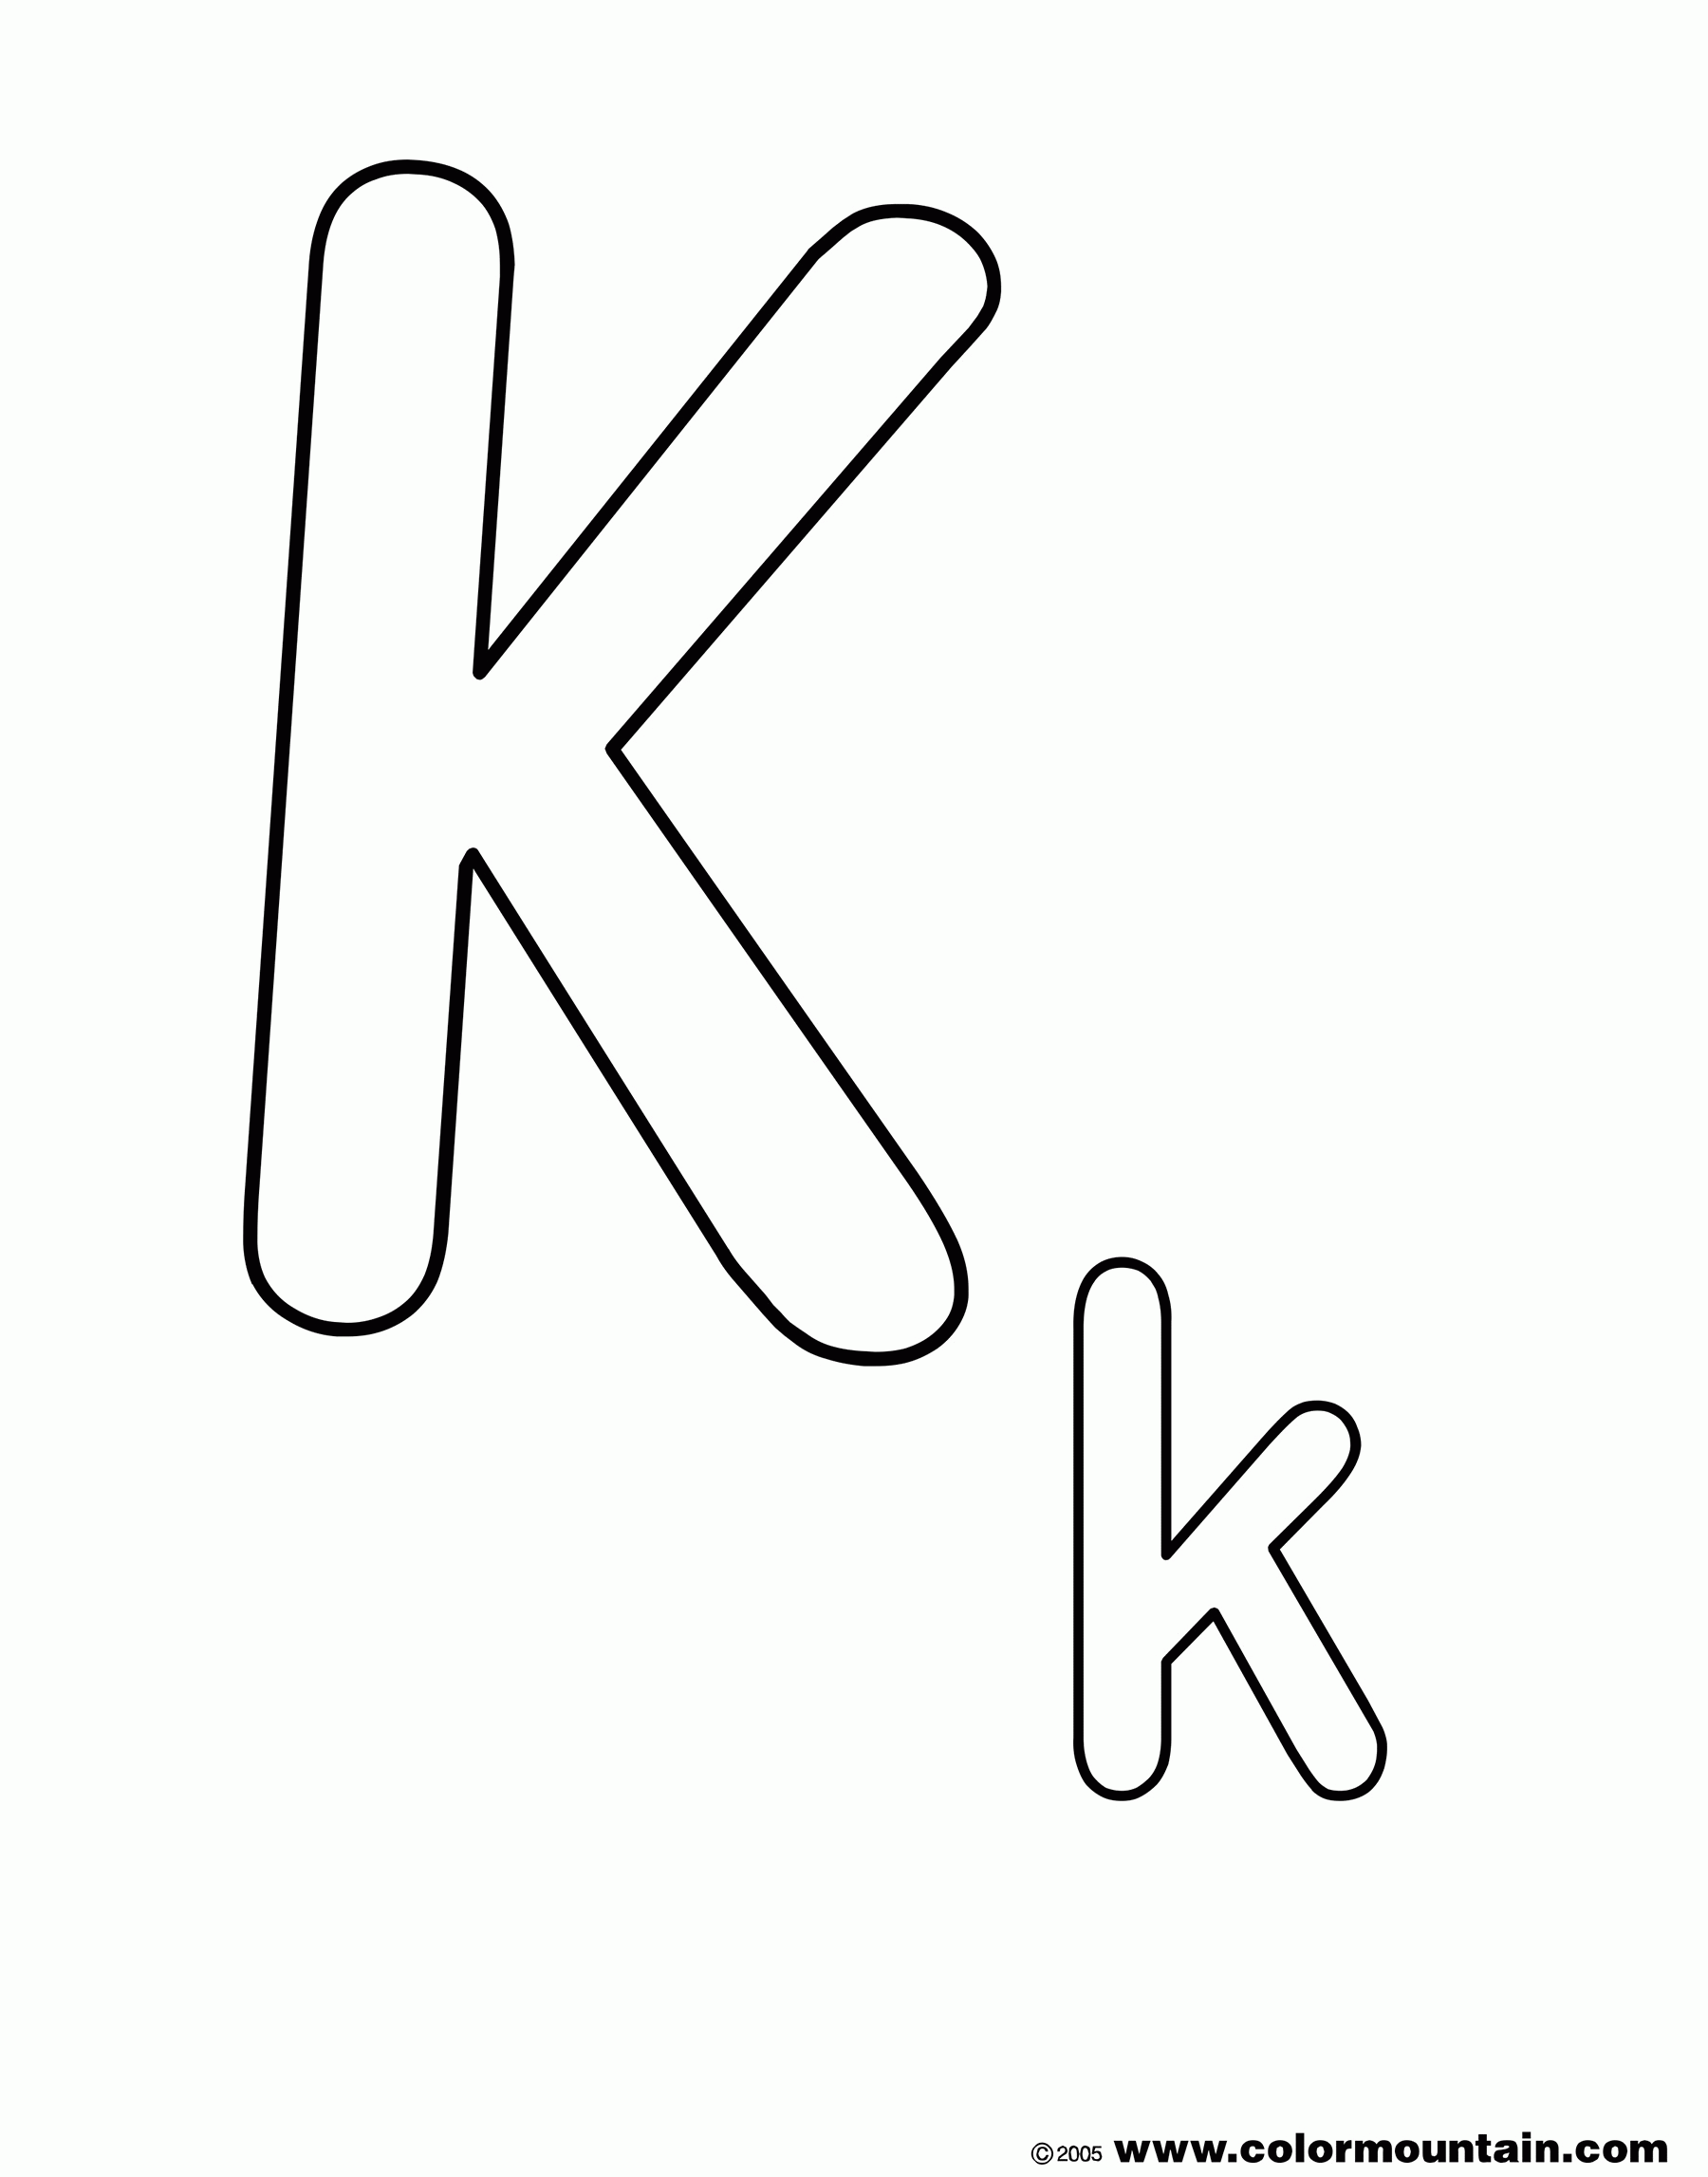 alphabet-coloring-book-page-letter-k